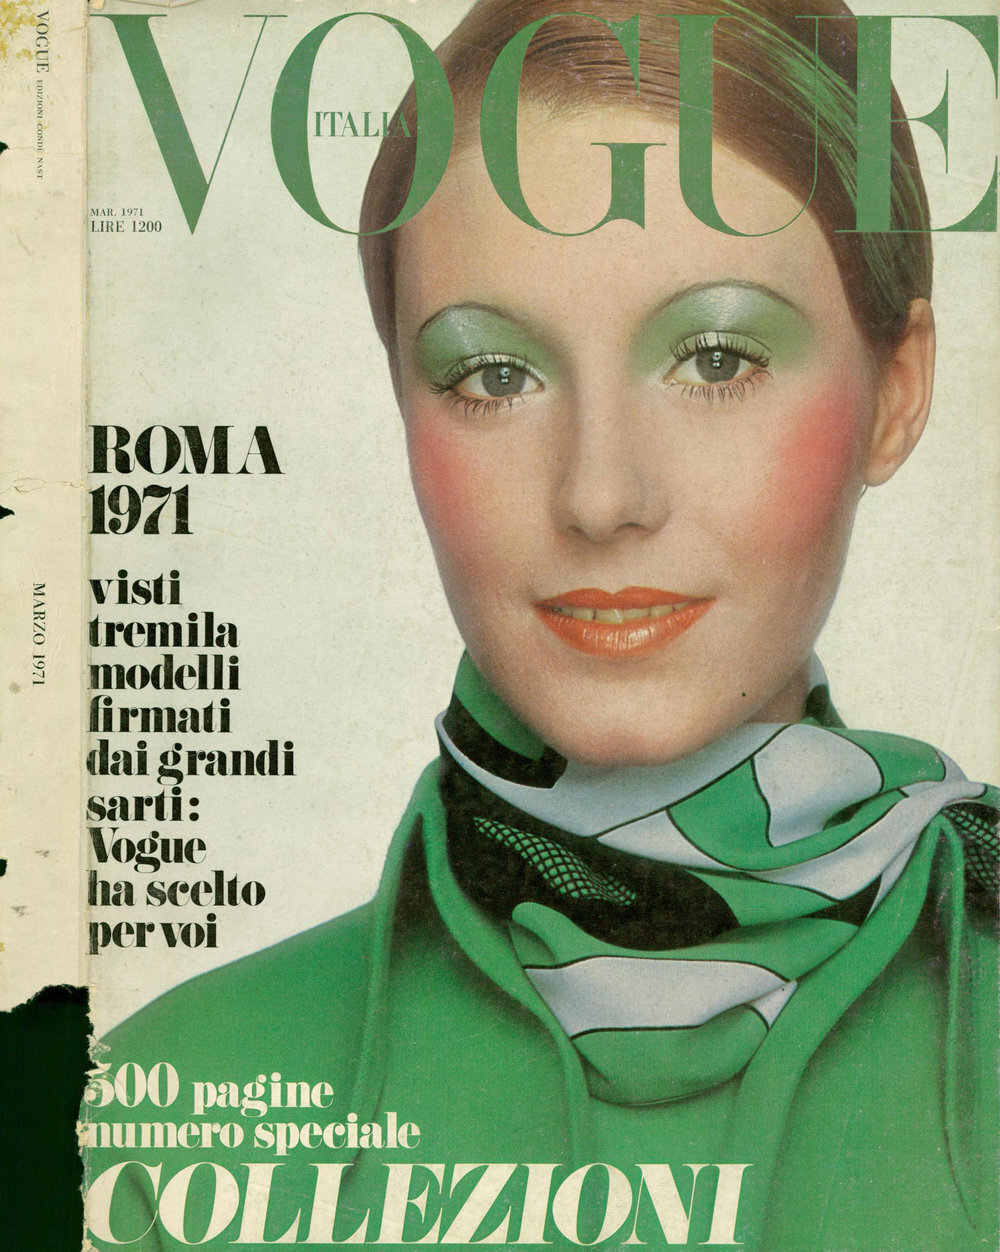 Vogue+Italia+(Mar+1971)_lategan_daly.jpg